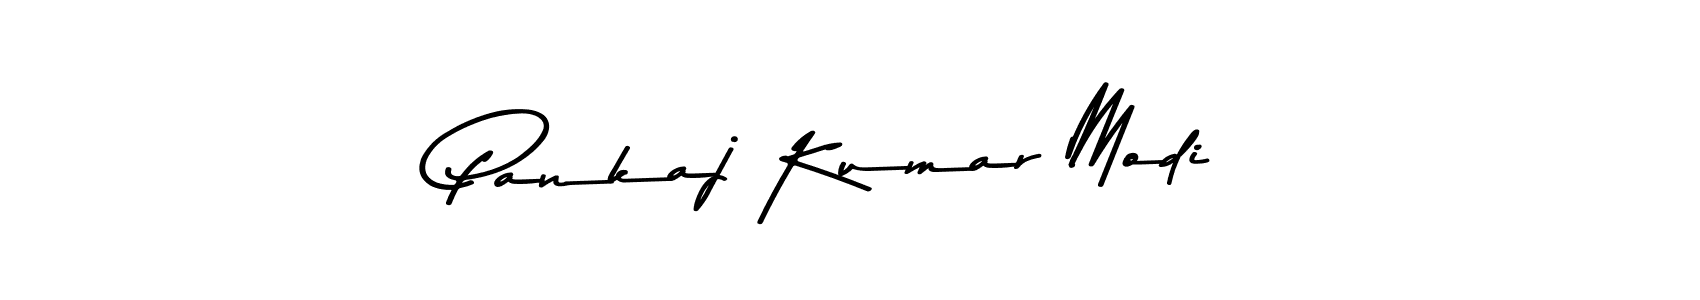 How to Draw Pankaj Kumar Modi signature style? Asem Kandis PERSONAL USE is a latest design signature styles for name Pankaj Kumar Modi. Pankaj Kumar Modi signature style 9 images and pictures png